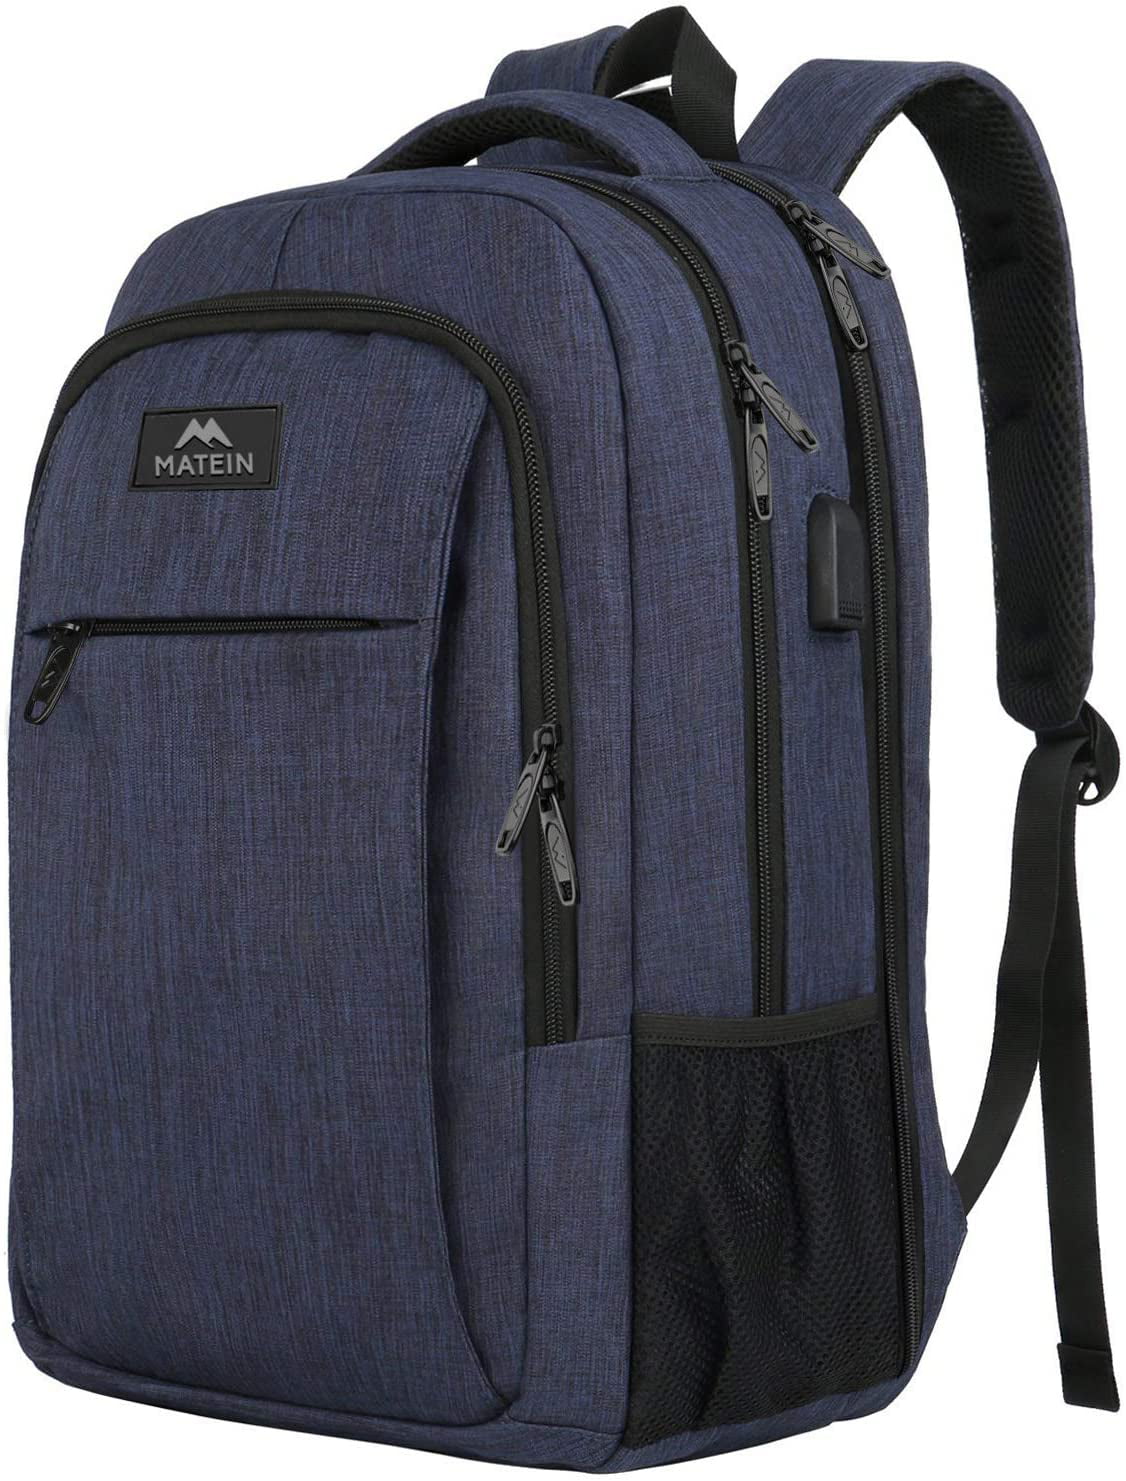 Fits 17 Inch Laptop,B Work Bag Lightweight Laptop Bag with USB Charging Port Travel Laptop Backpack 